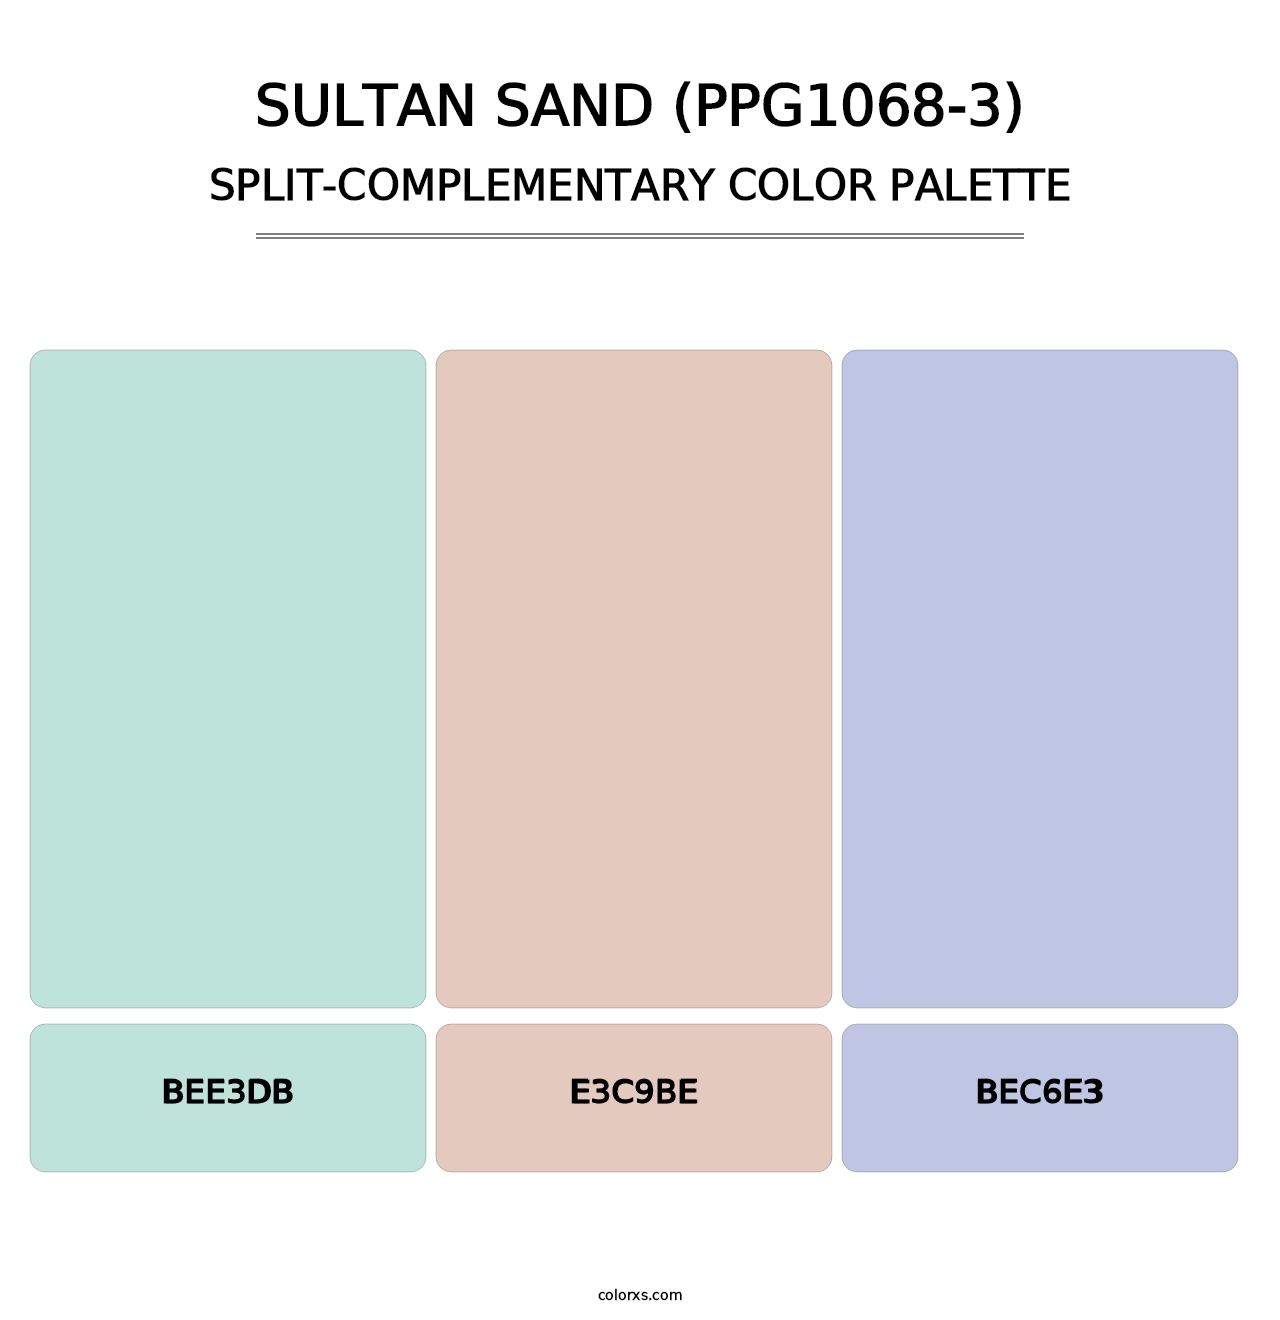 Sultan Sand (PPG1068-3) - Split-Complementary Color Palette